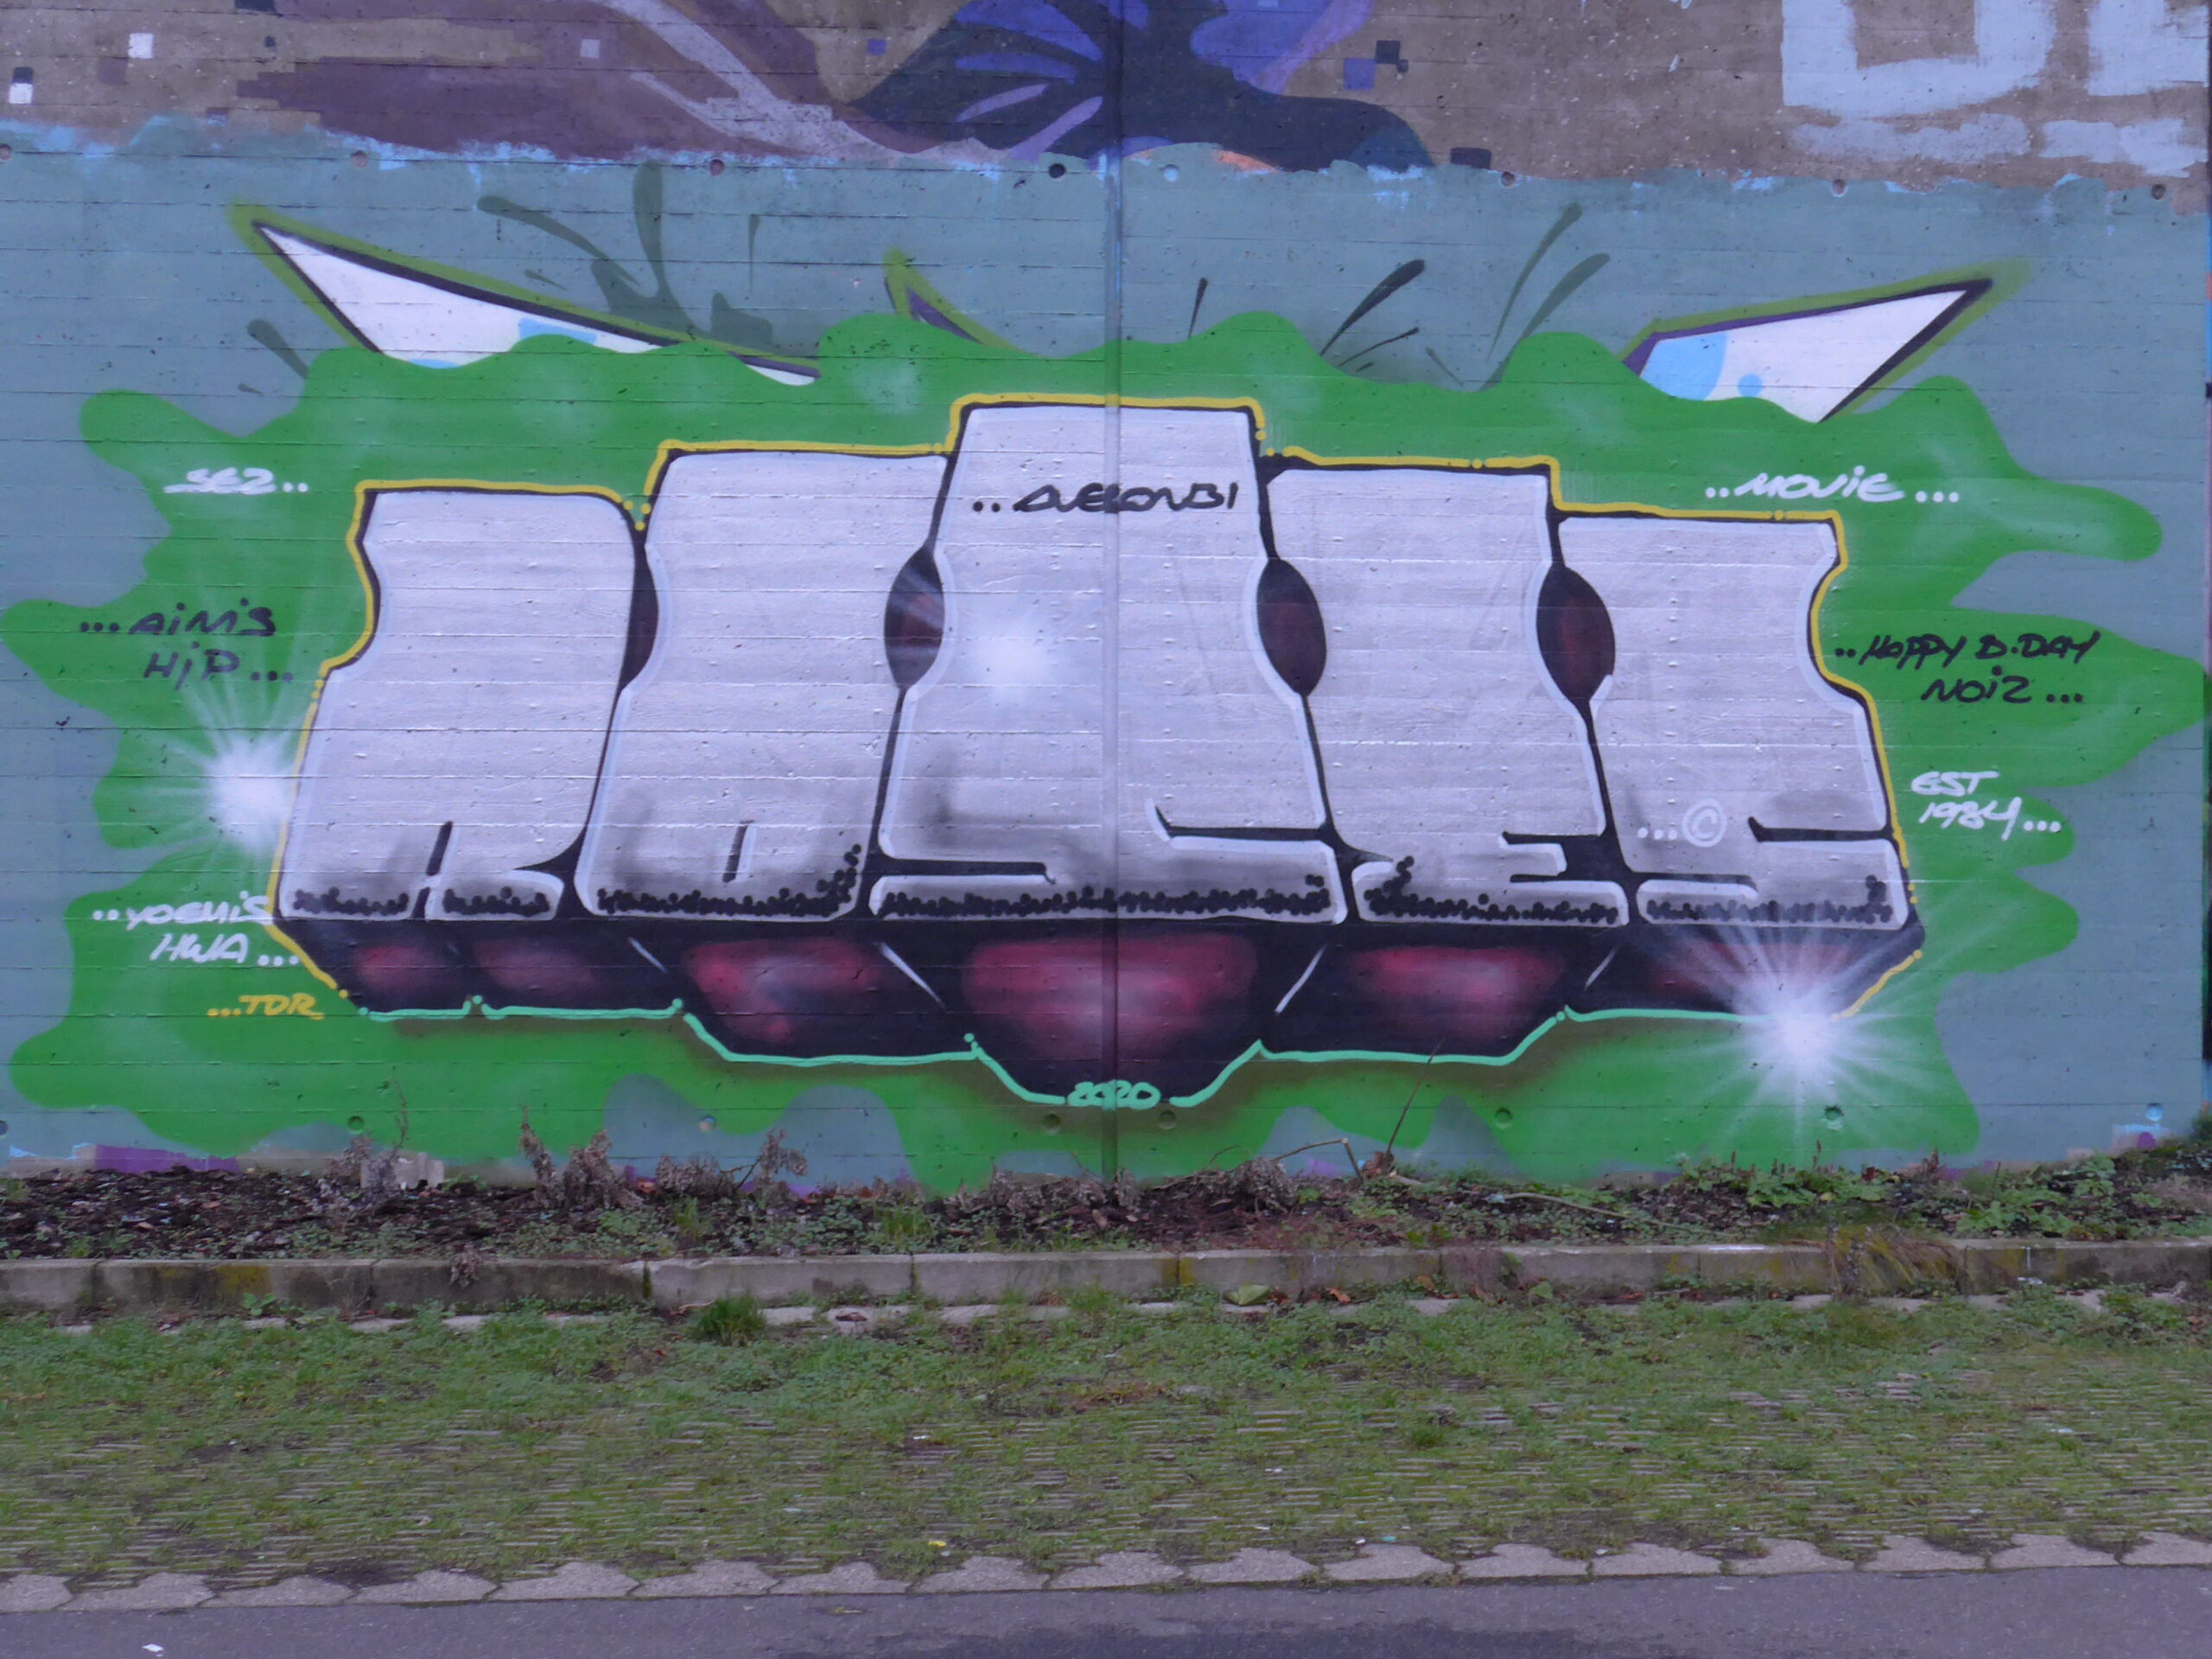 Copenhagen – Graffiti